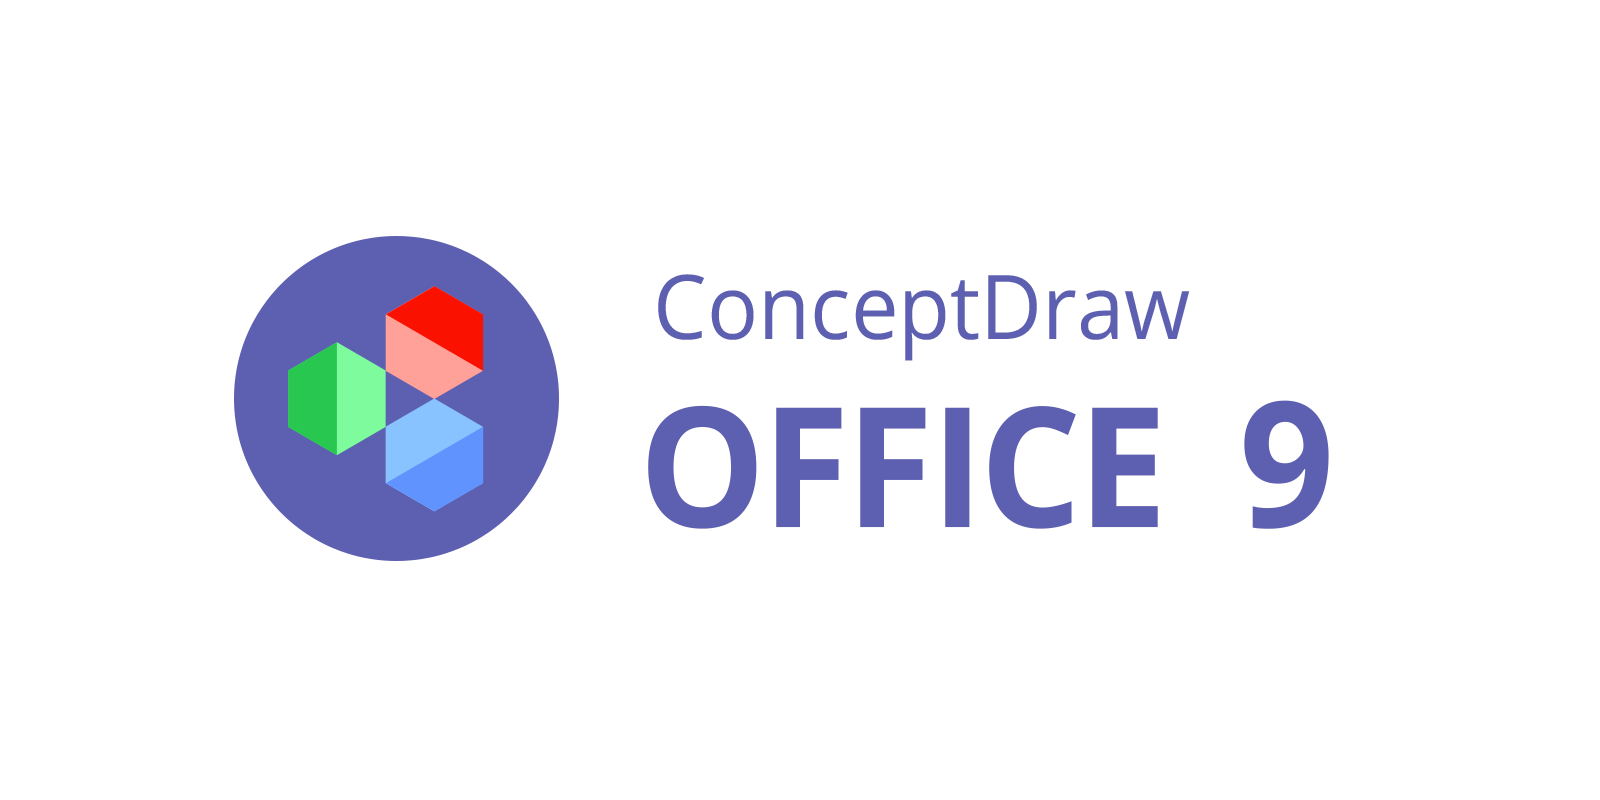 ConceptDraw OFFICE logo